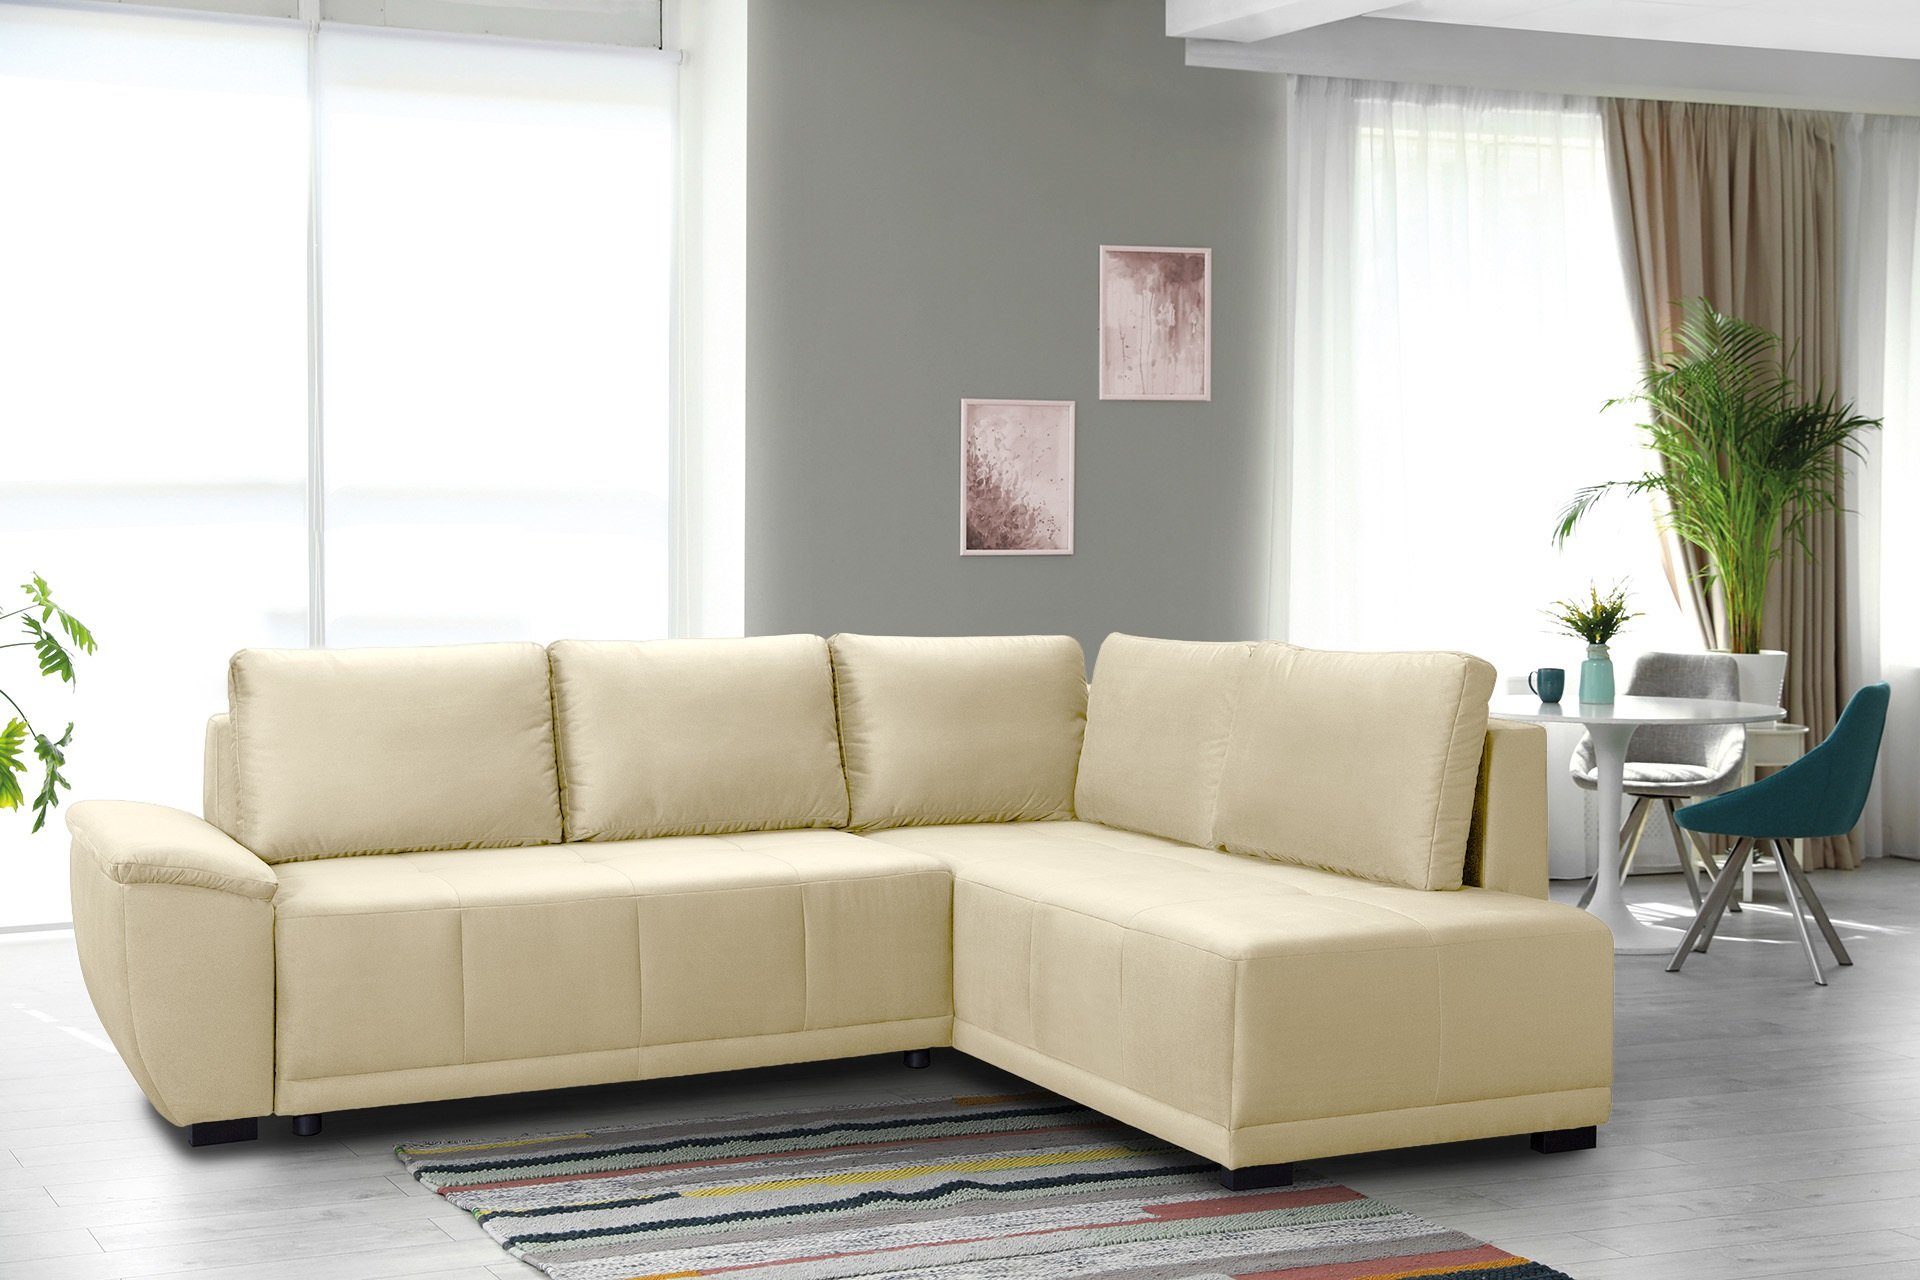 exxpo - sofa & beidseitig, 5 mane Ecksofa, Rückenkissen inkl. Bettkasten, fashion Schlaffunktion